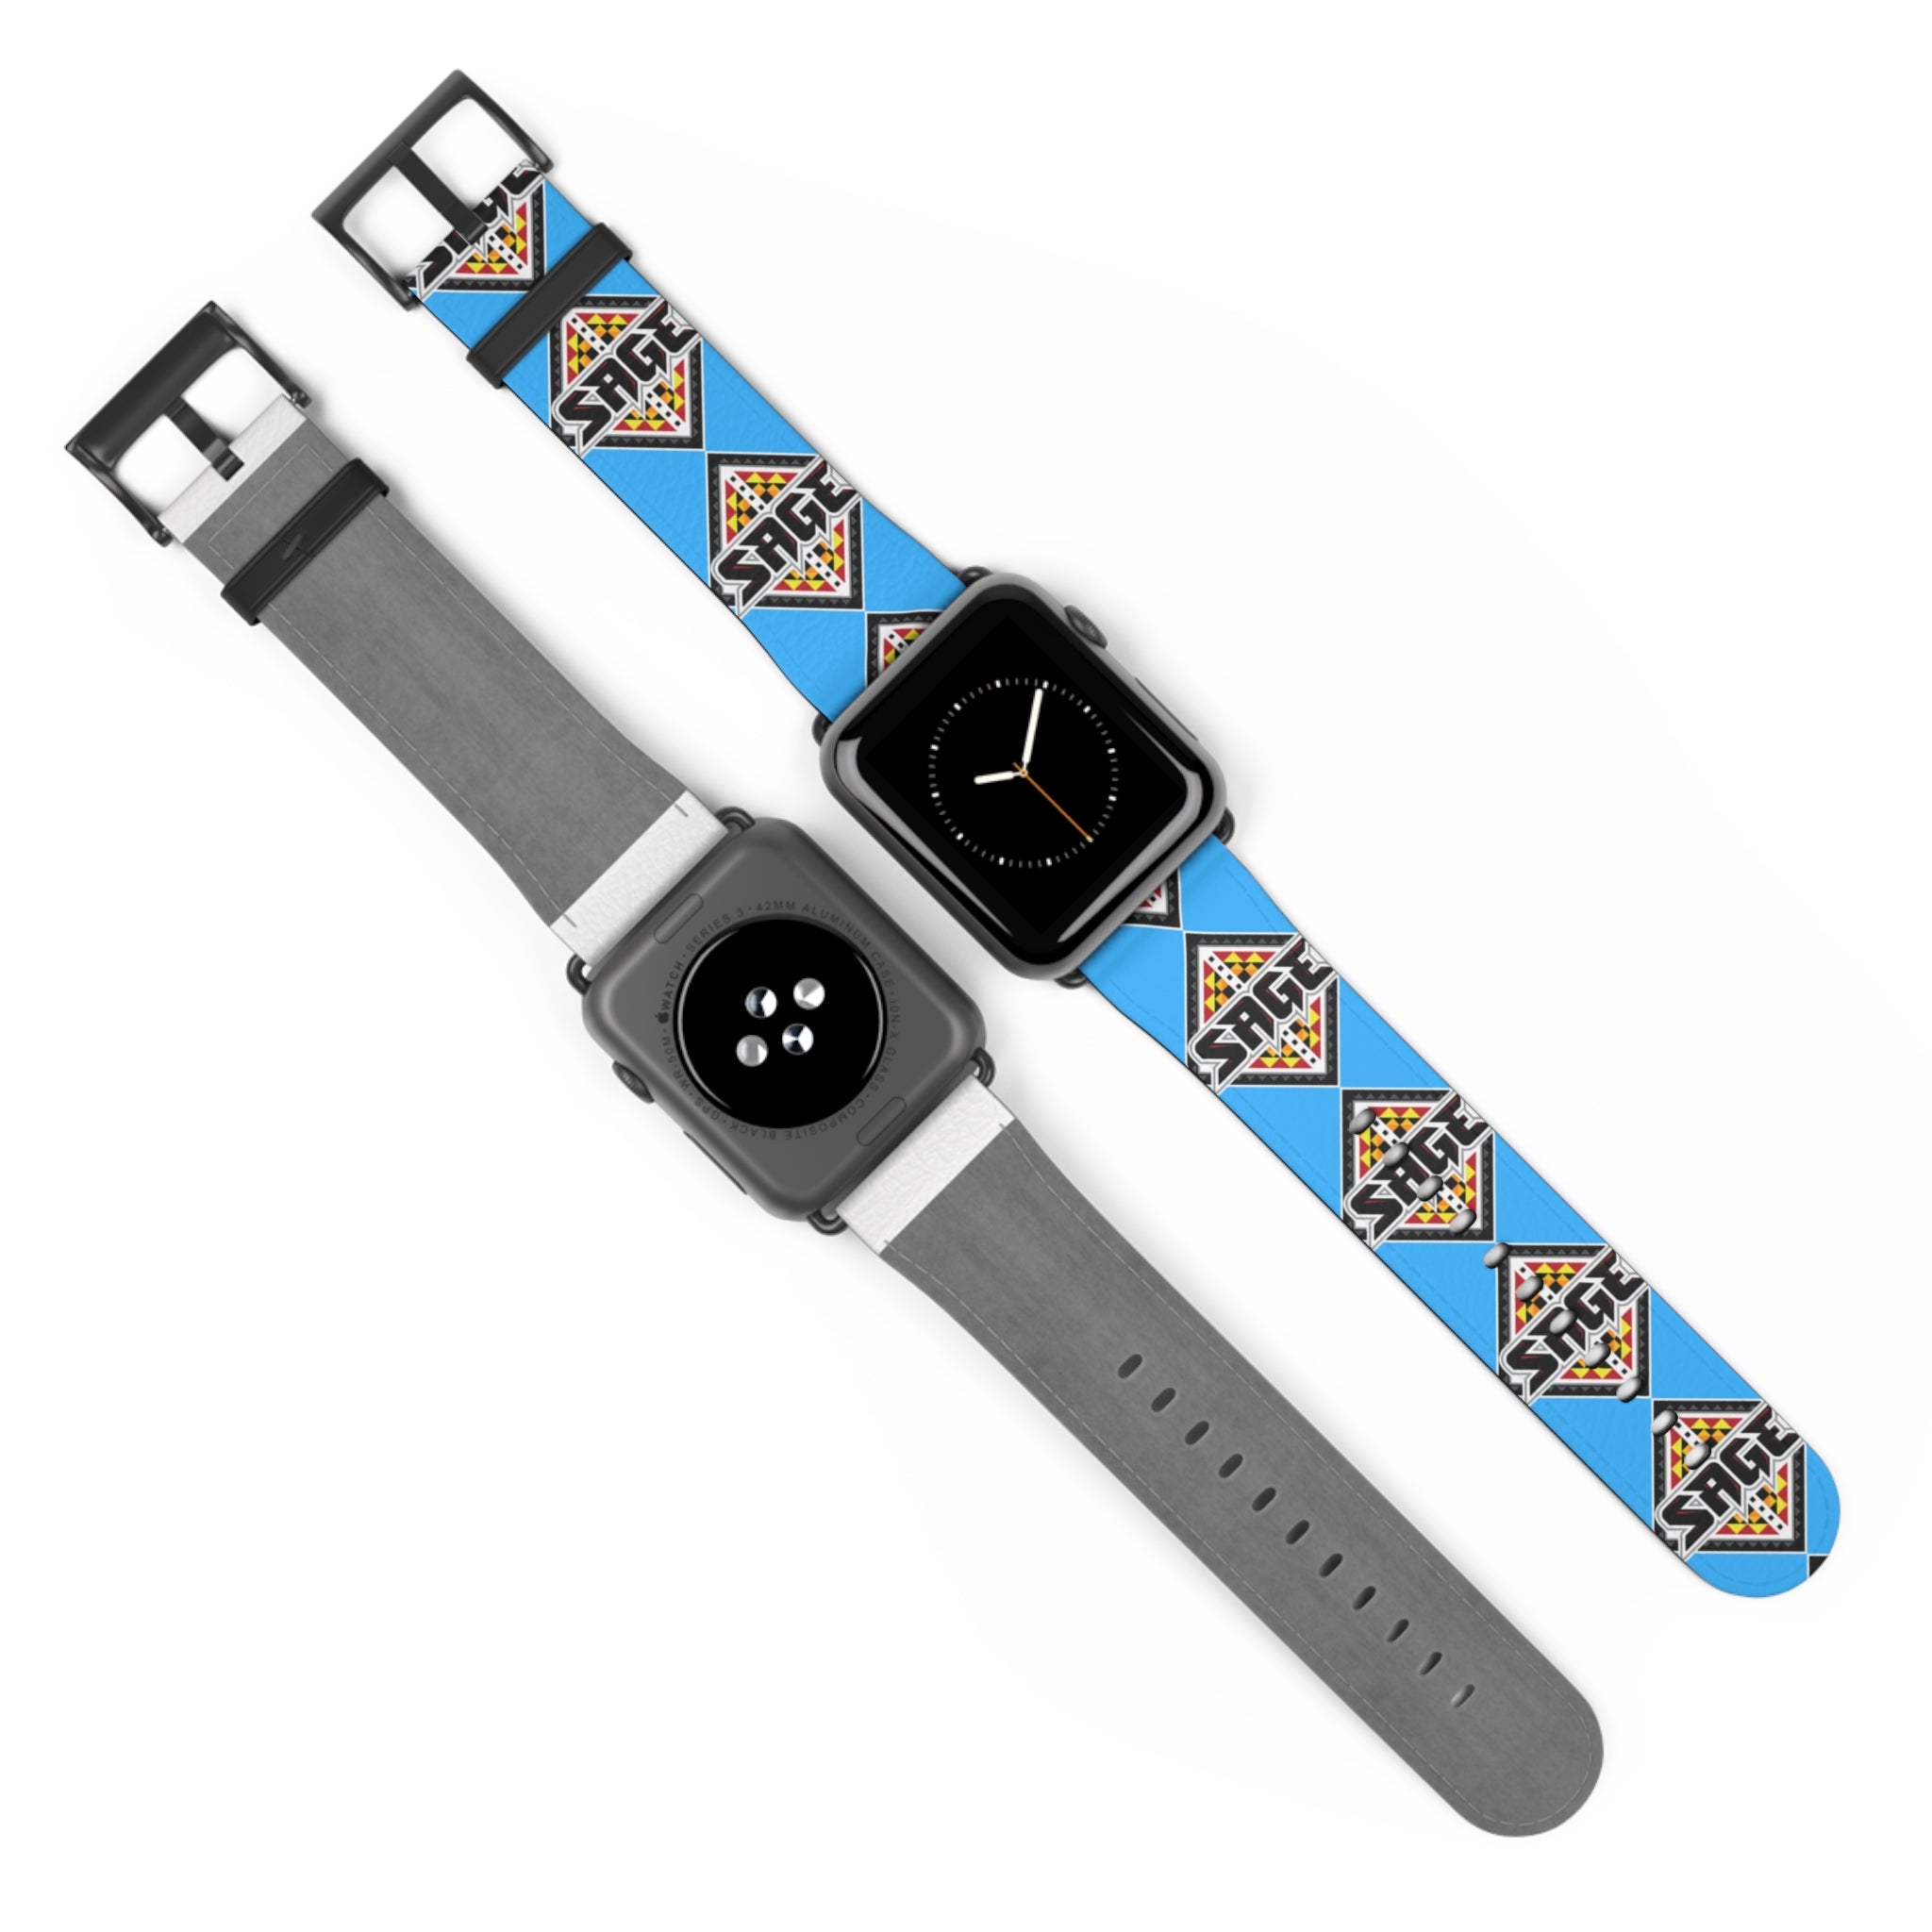 SAGE Geometric Leather Blue Apple Watch Band